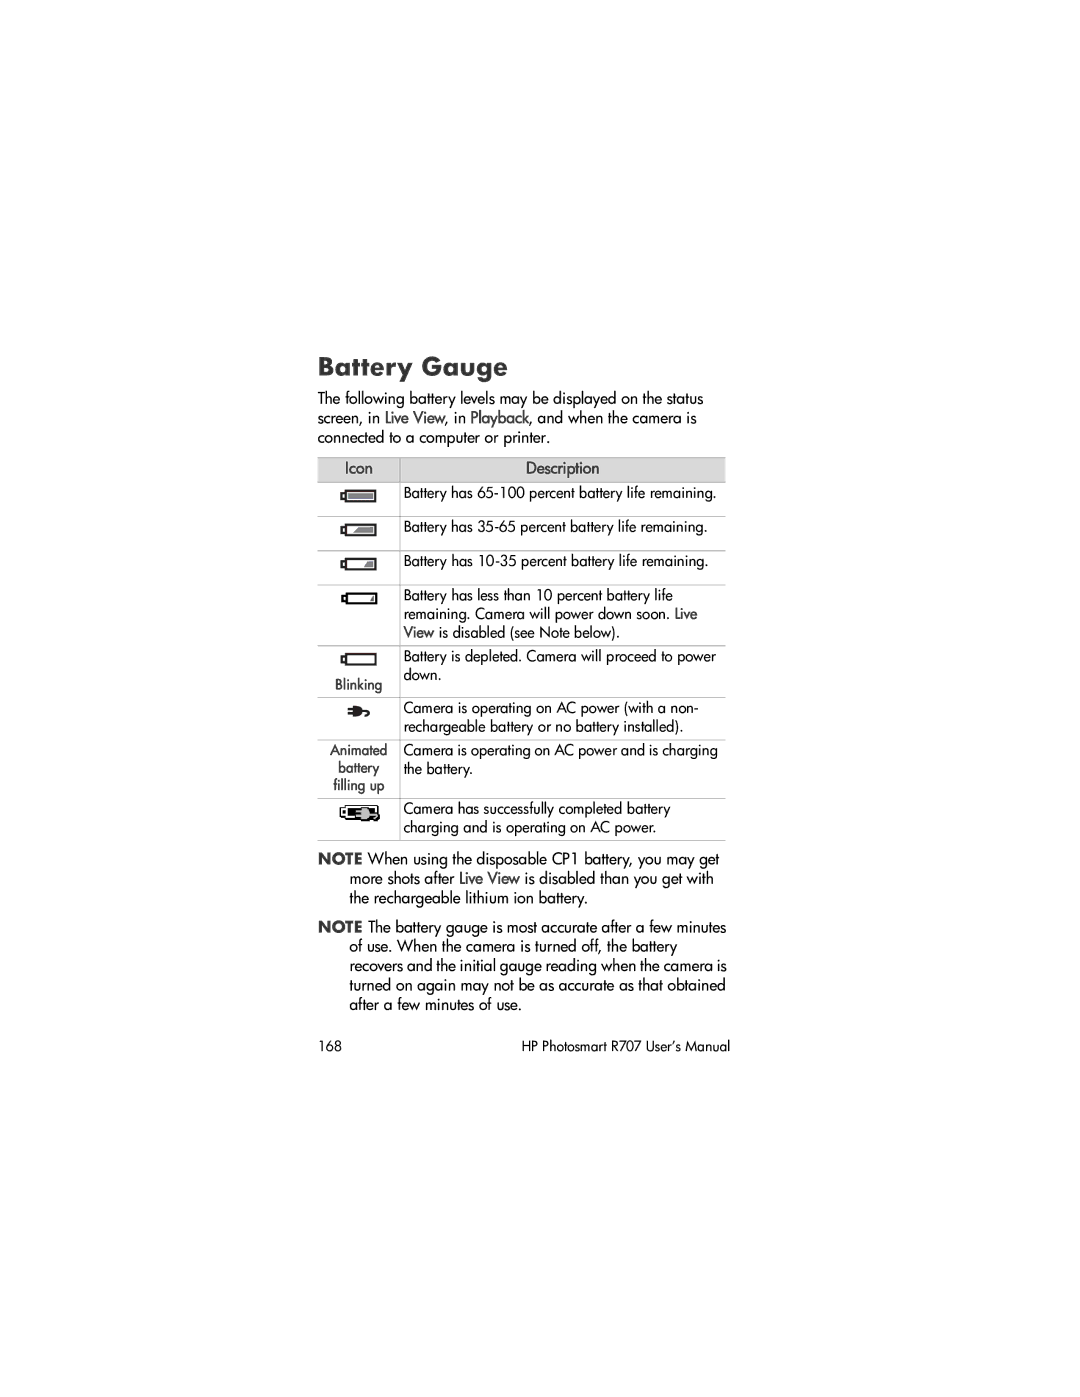 HP R707 manual Battery Gauge, Icon Description 